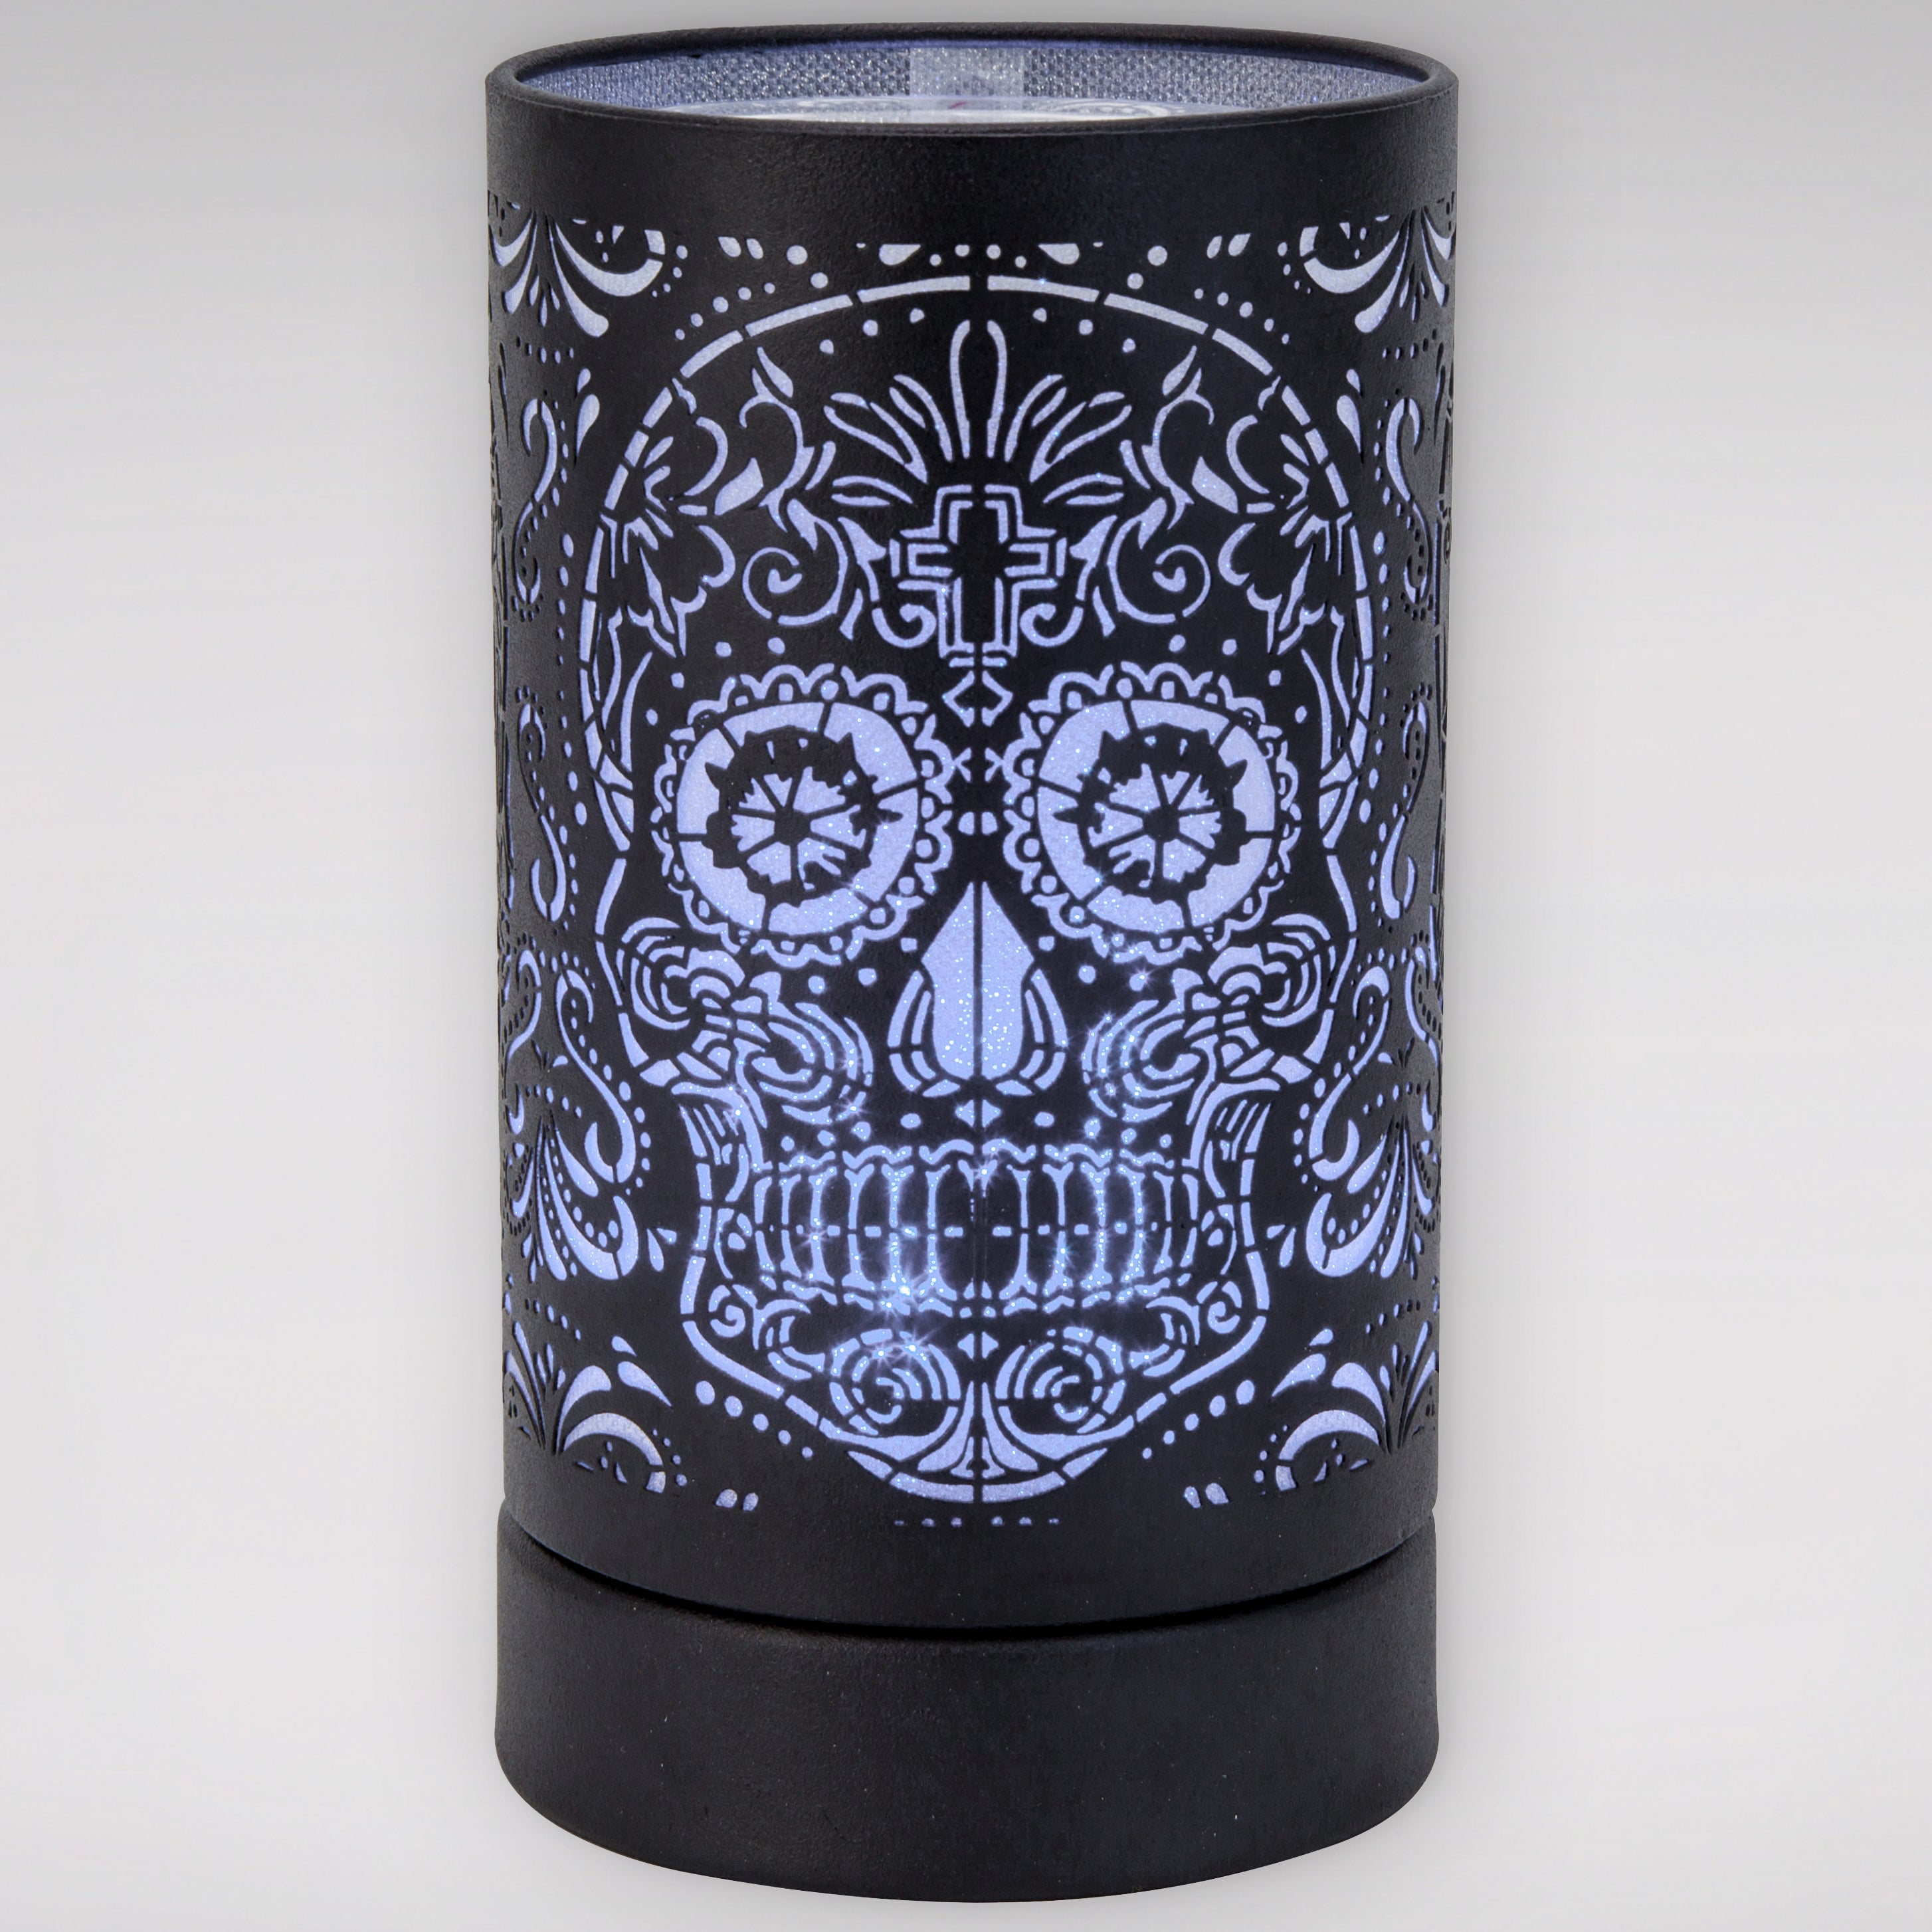 Scentchips Warmer - Black LED 'Skull' Colour Changing Display